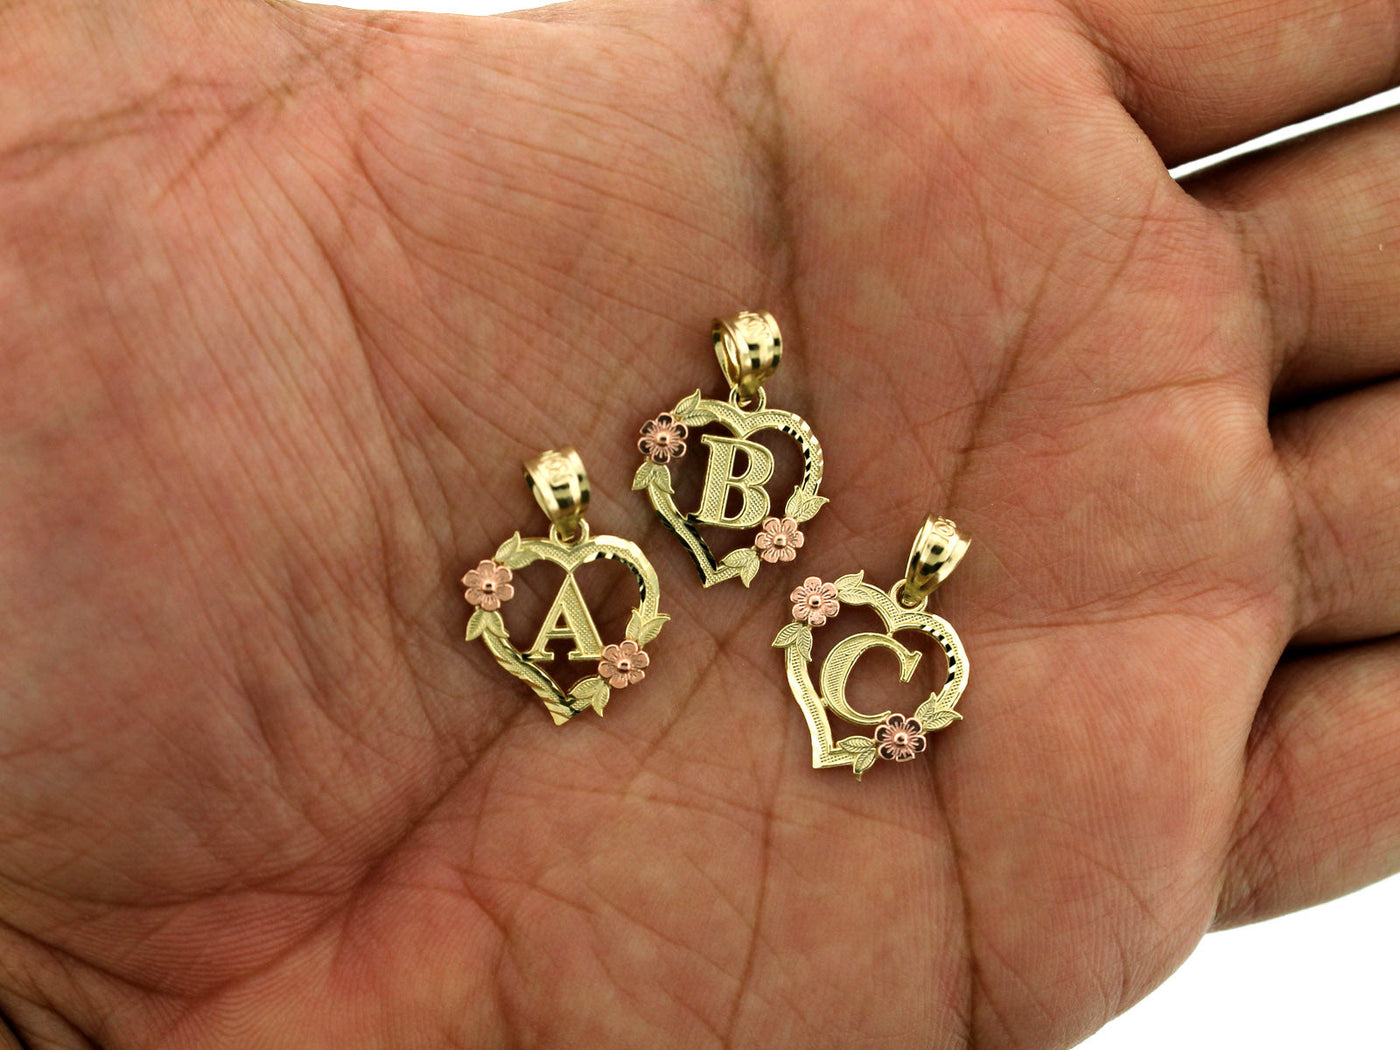 10K Yellow Gold Heart Initial Letter Pendant A-Z Alphabet Flower Necklace Charm